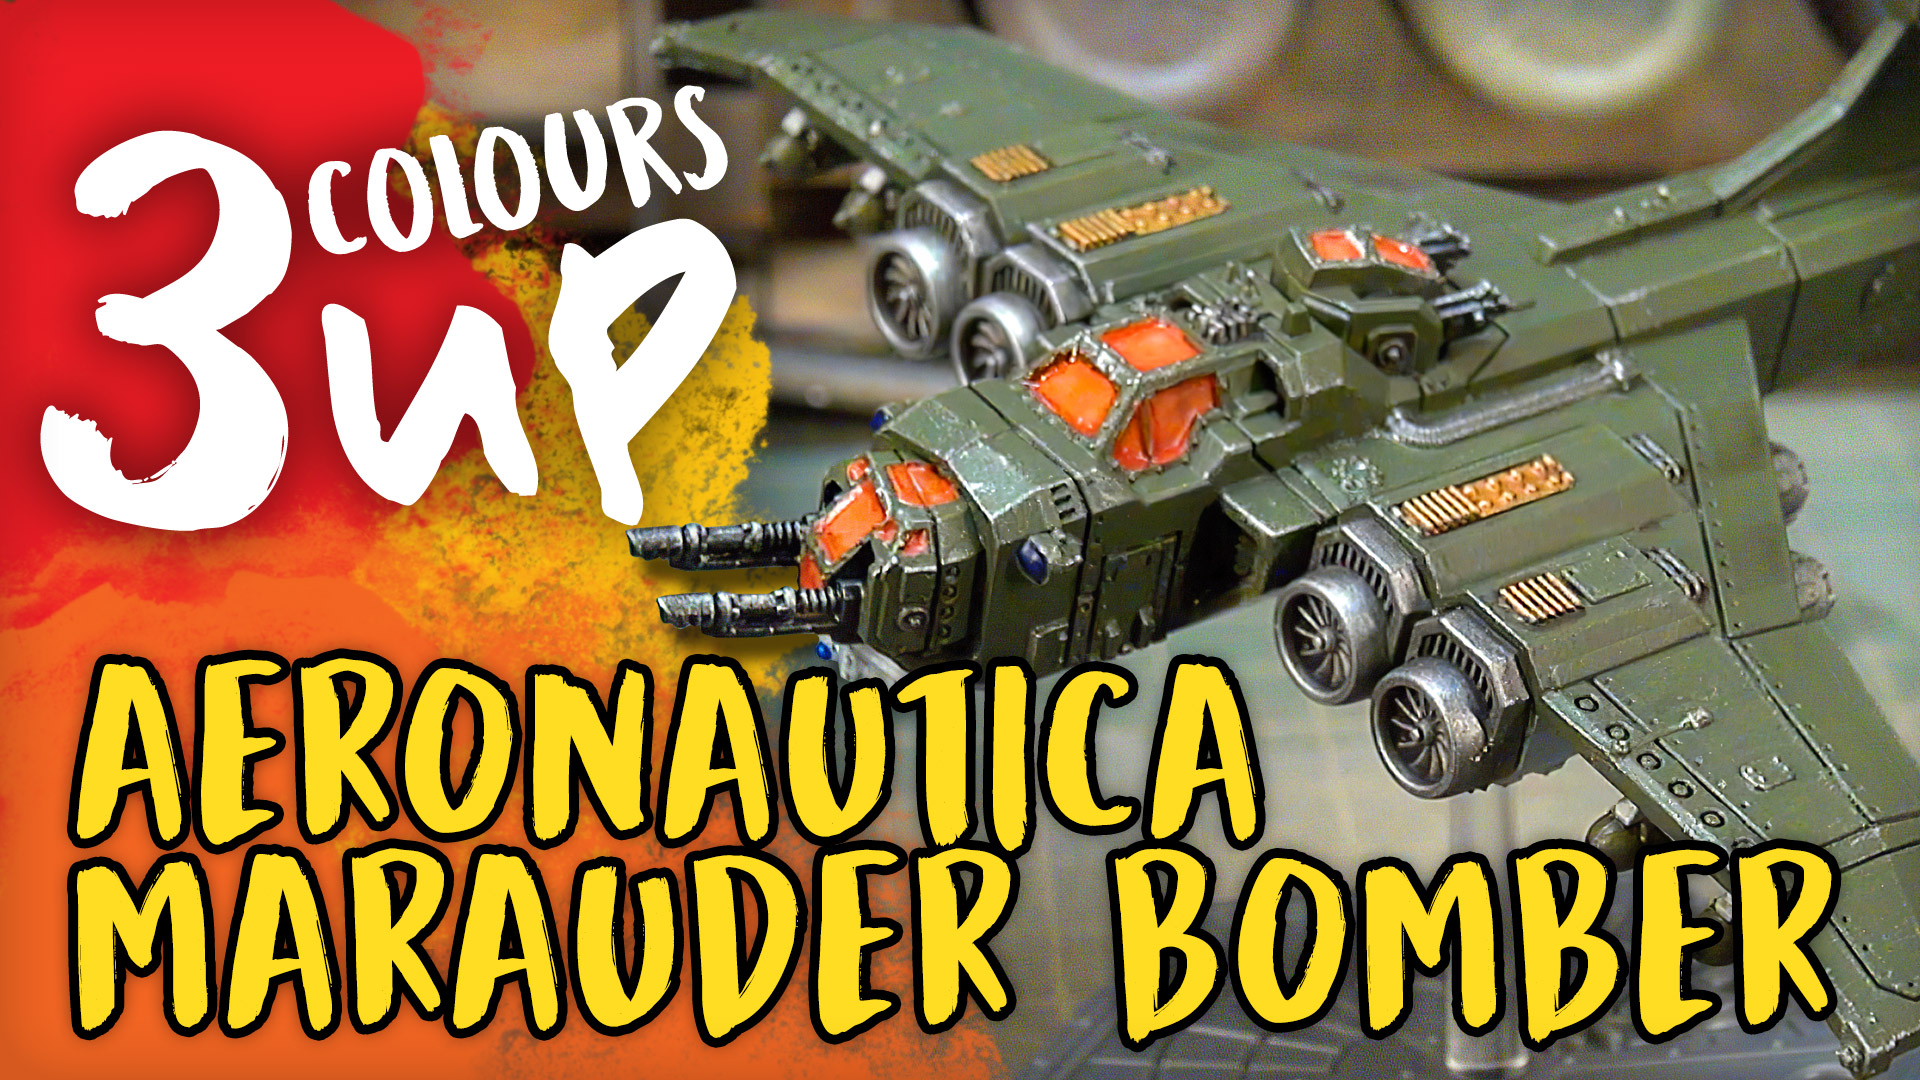 3CU-Maruader-Bomber-coverimage